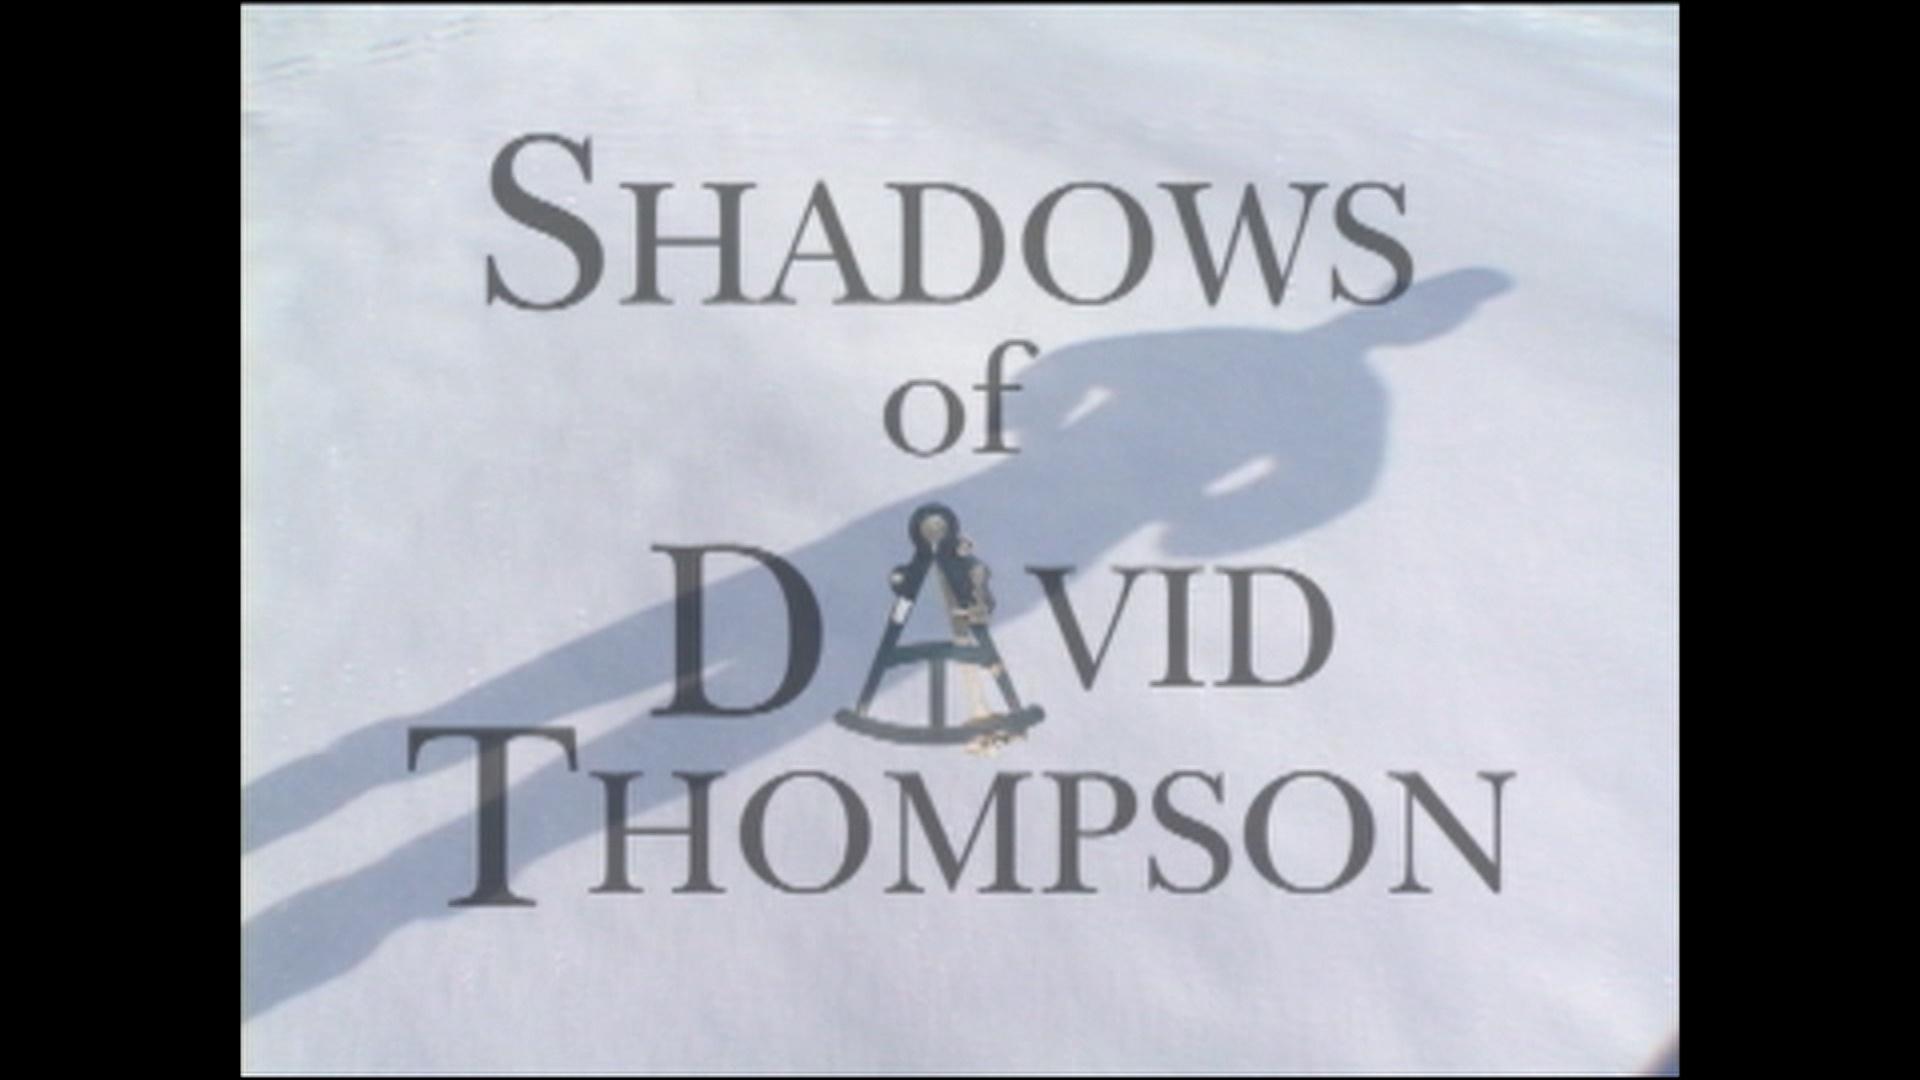 David Thompson doc in the works from Meadowlark Media